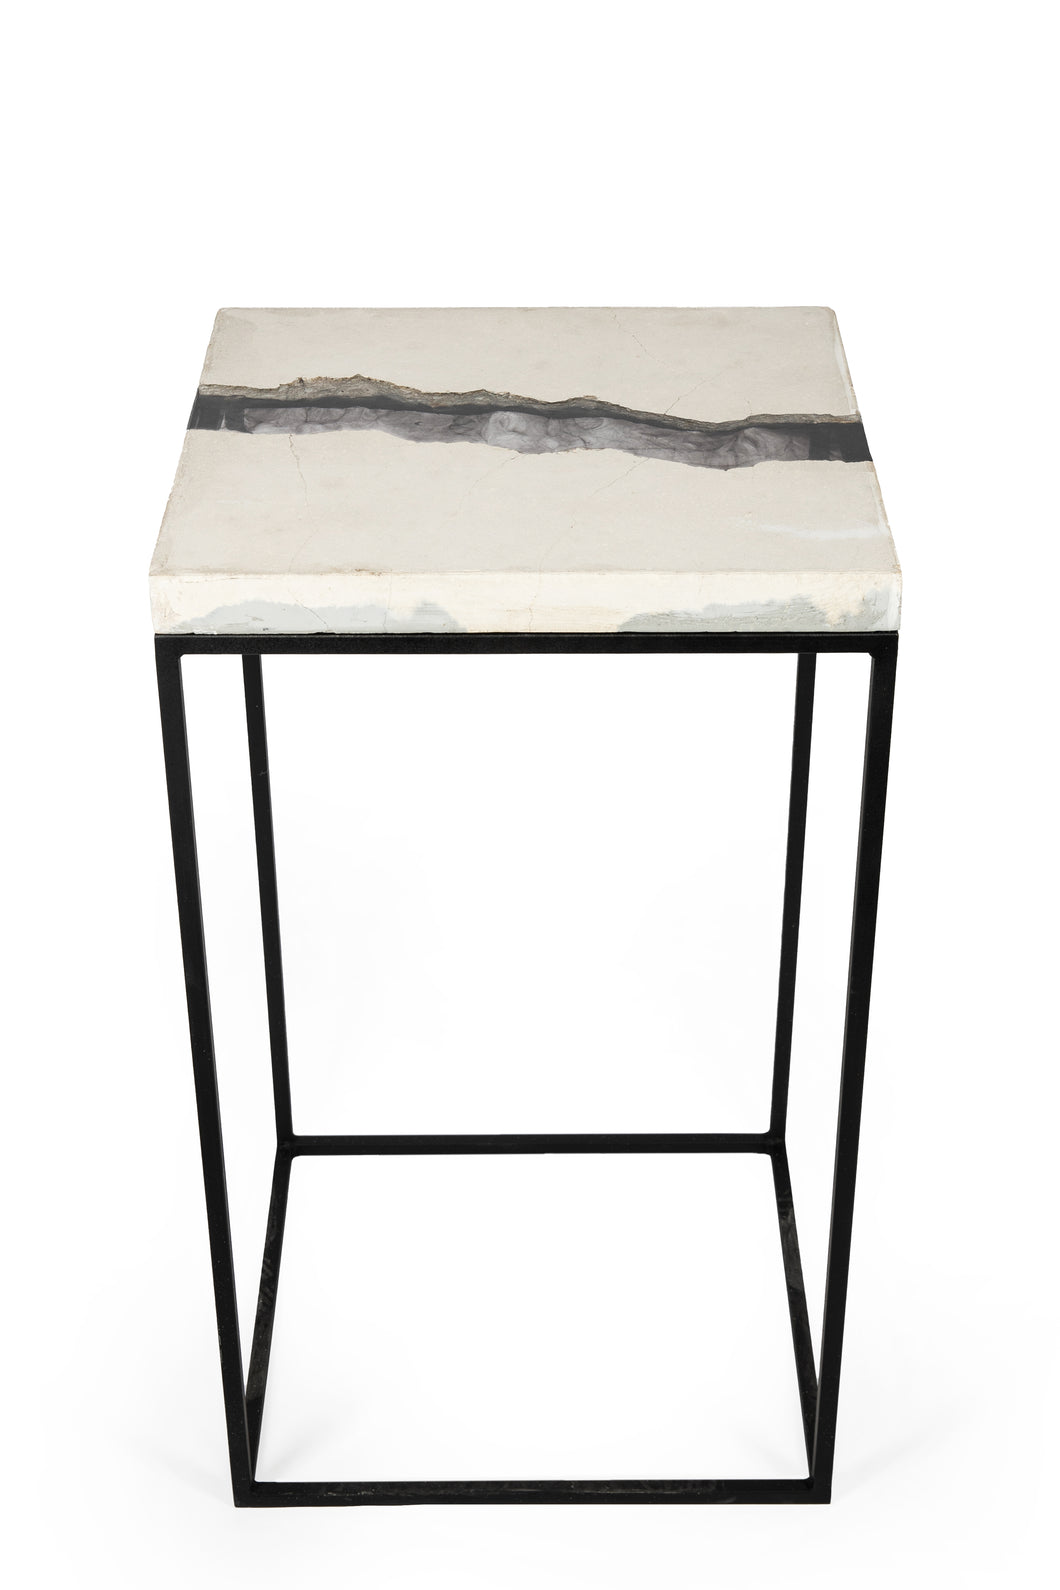 My concrete design Table #1